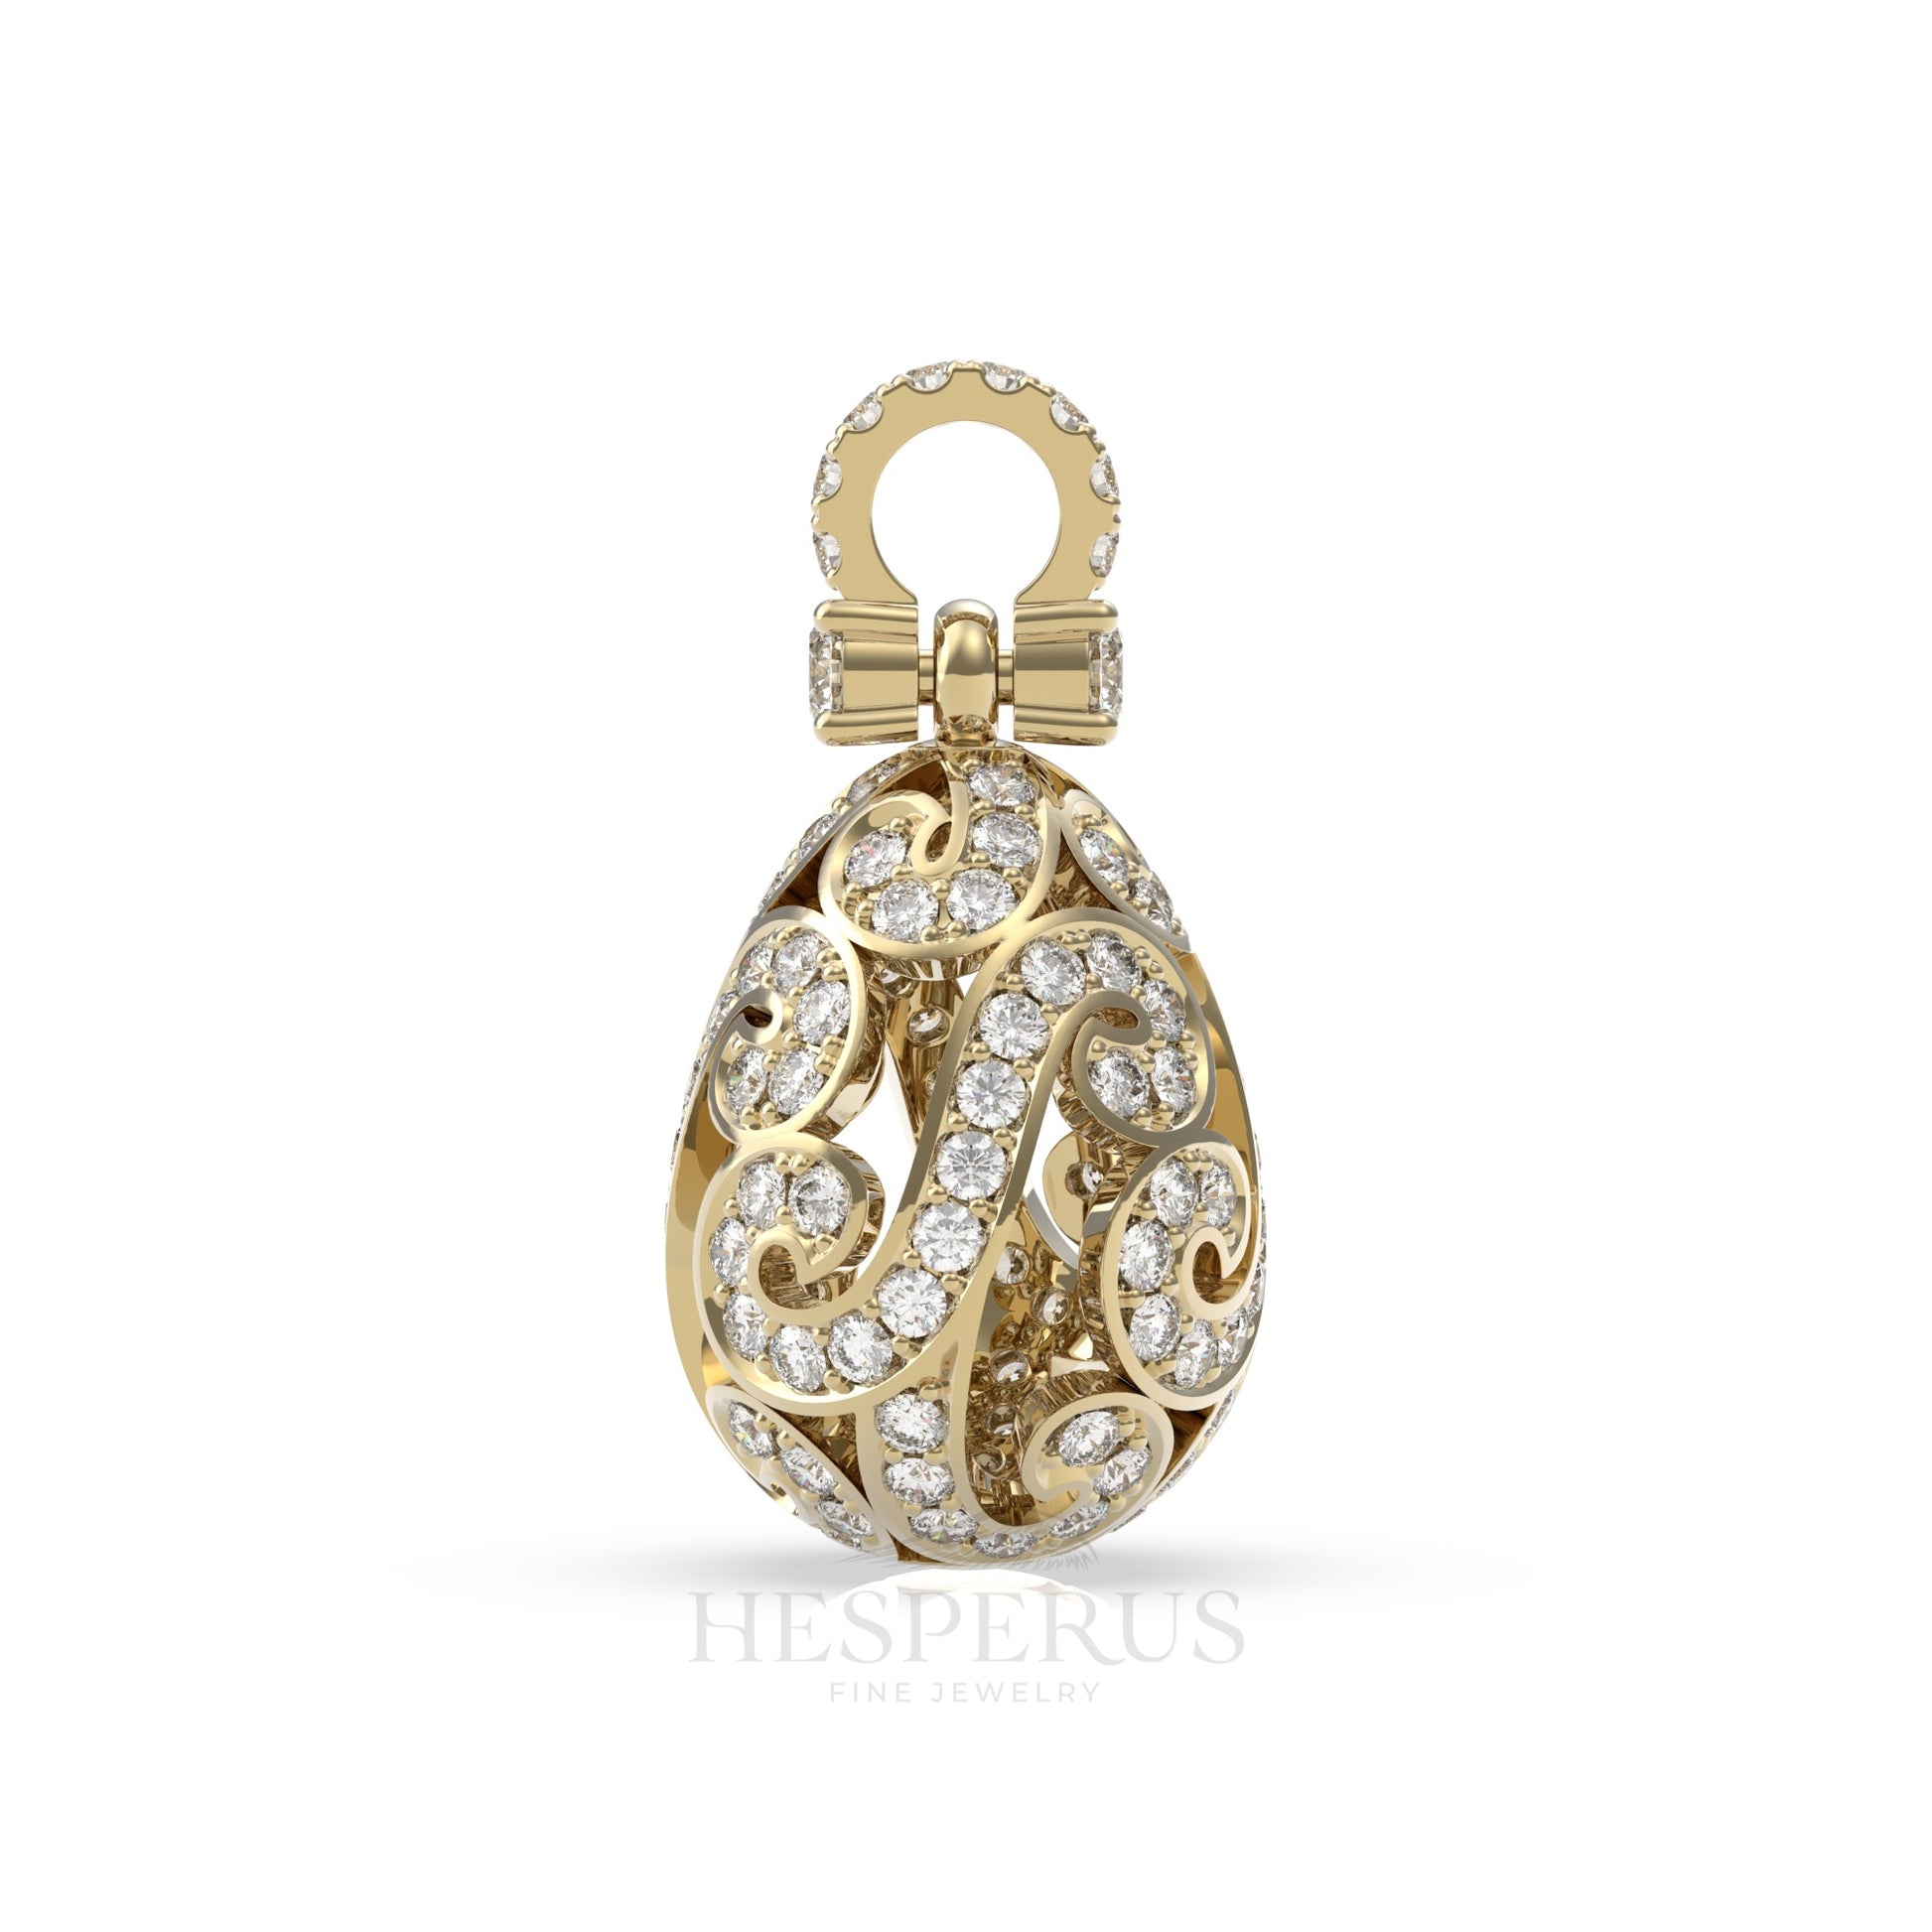 The Golden Egg-Hesperus Fine Jewelry